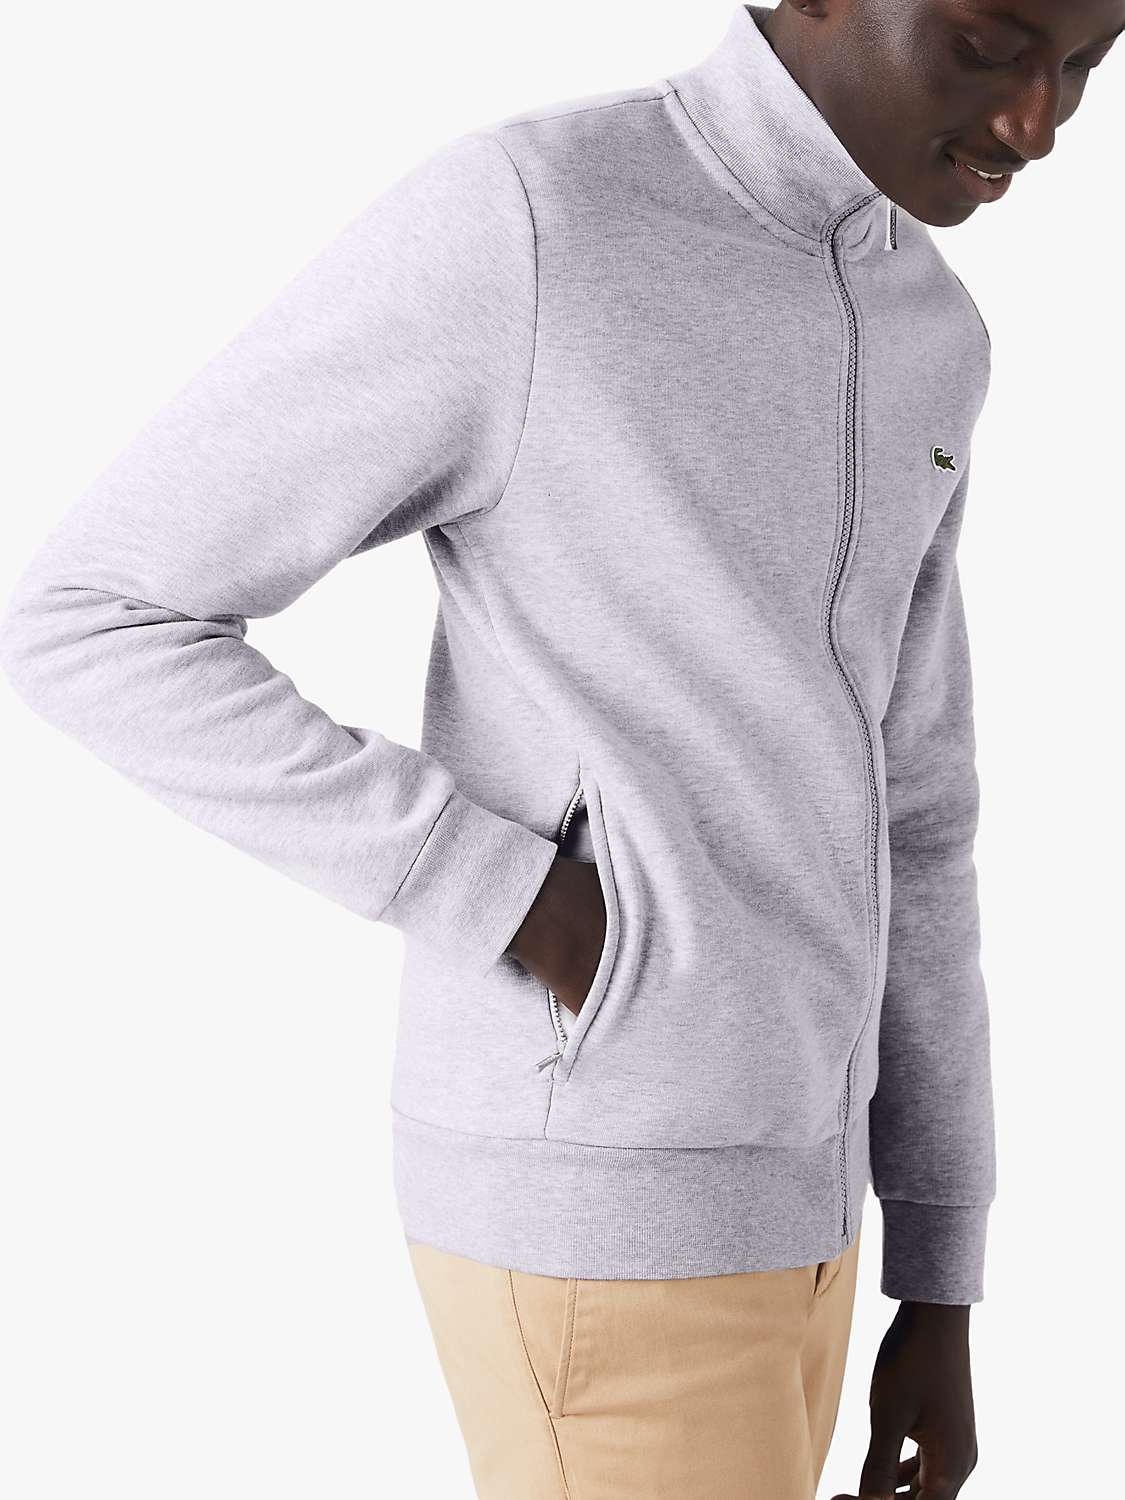 Buy Lacoste Cotton Blend Zip Funnel Neck Sweatshirt Online at johnlewis.com